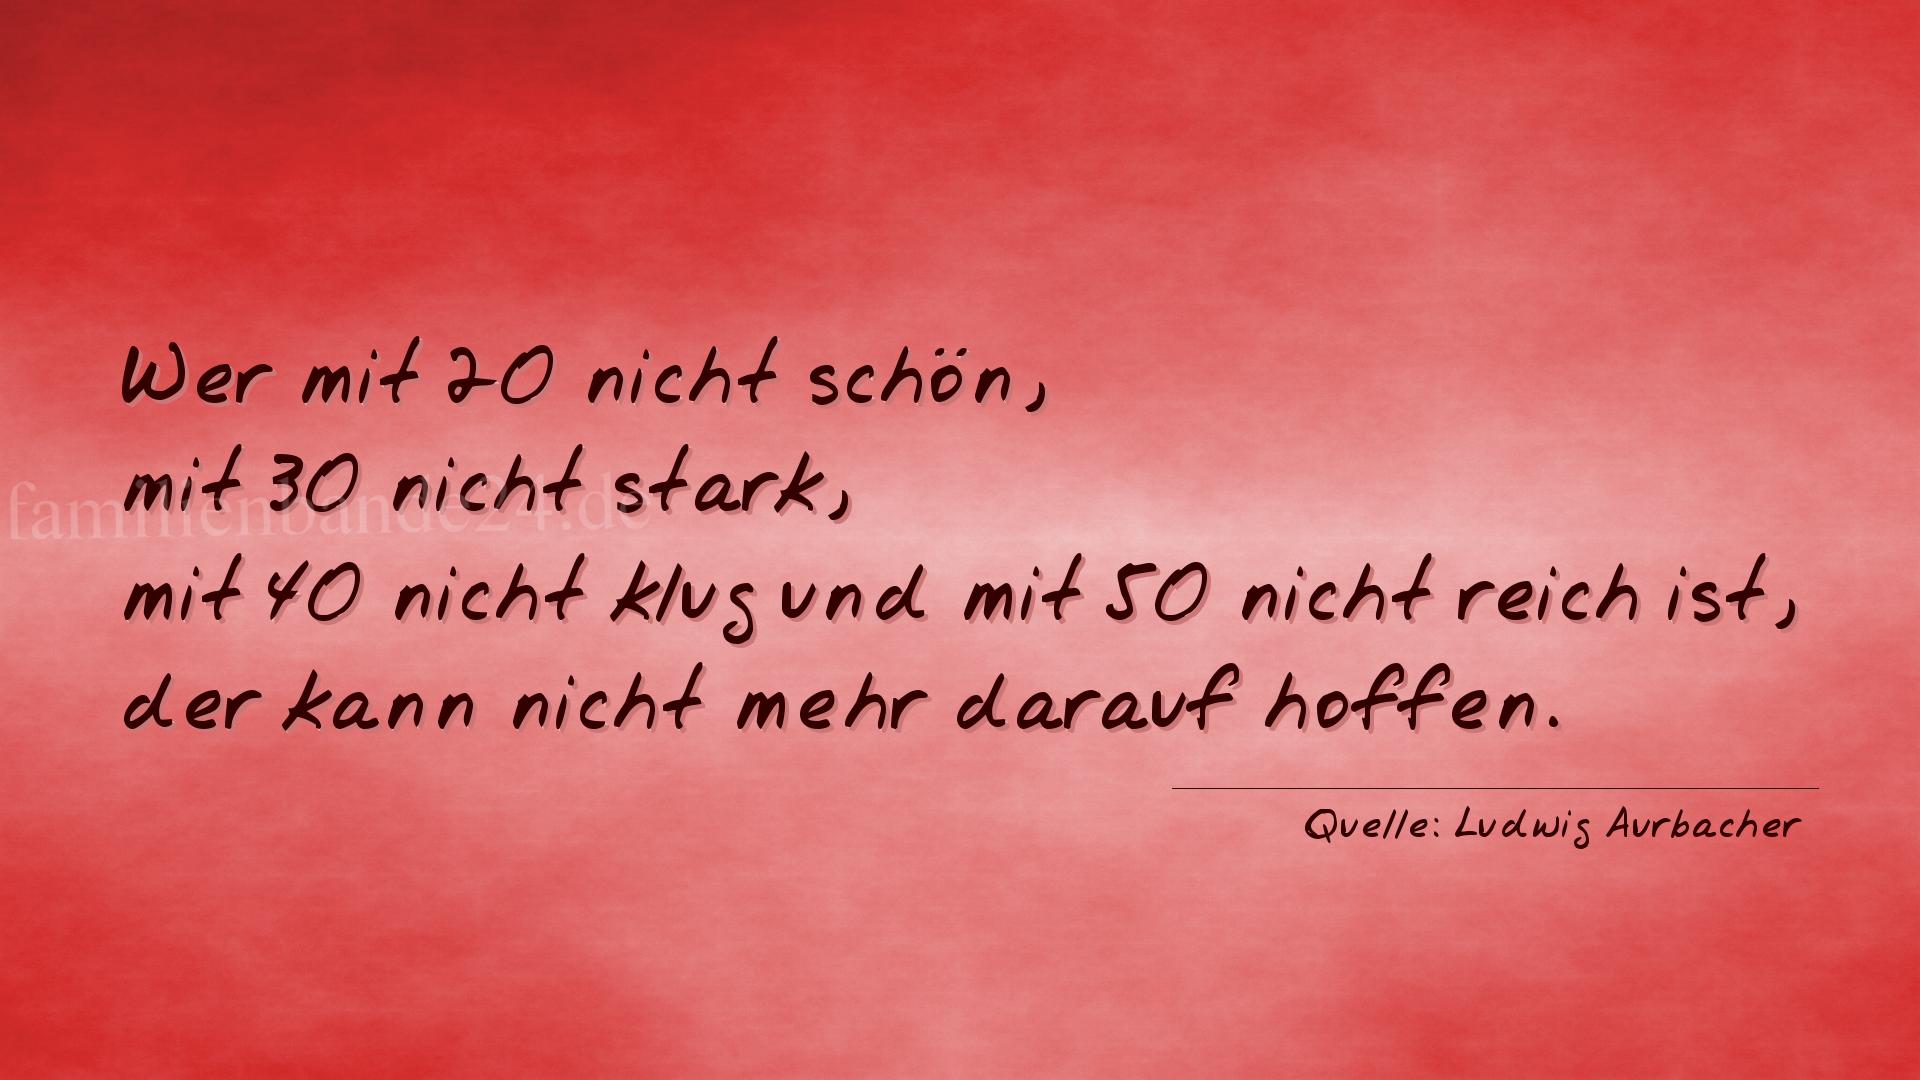 Thumbnail  zu Aphorismus  No. 1228  (von Ludwig Aurbacher)